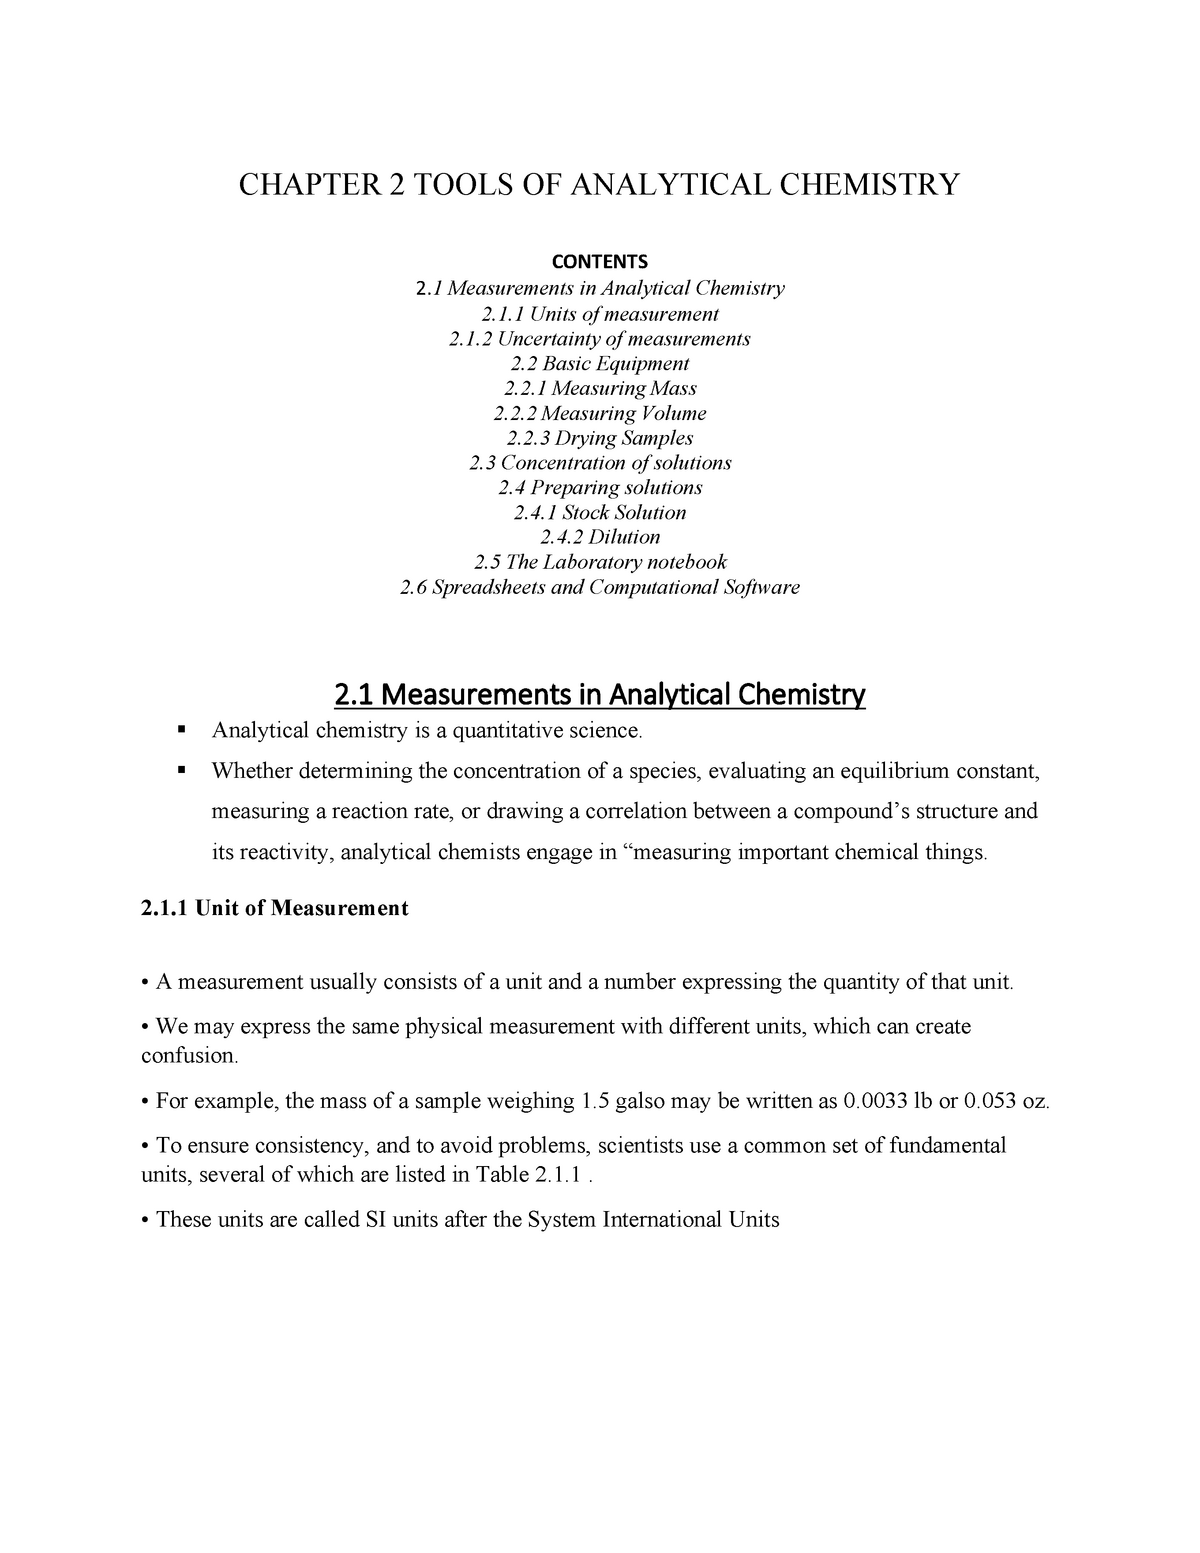 dissertation of analytical chemistry